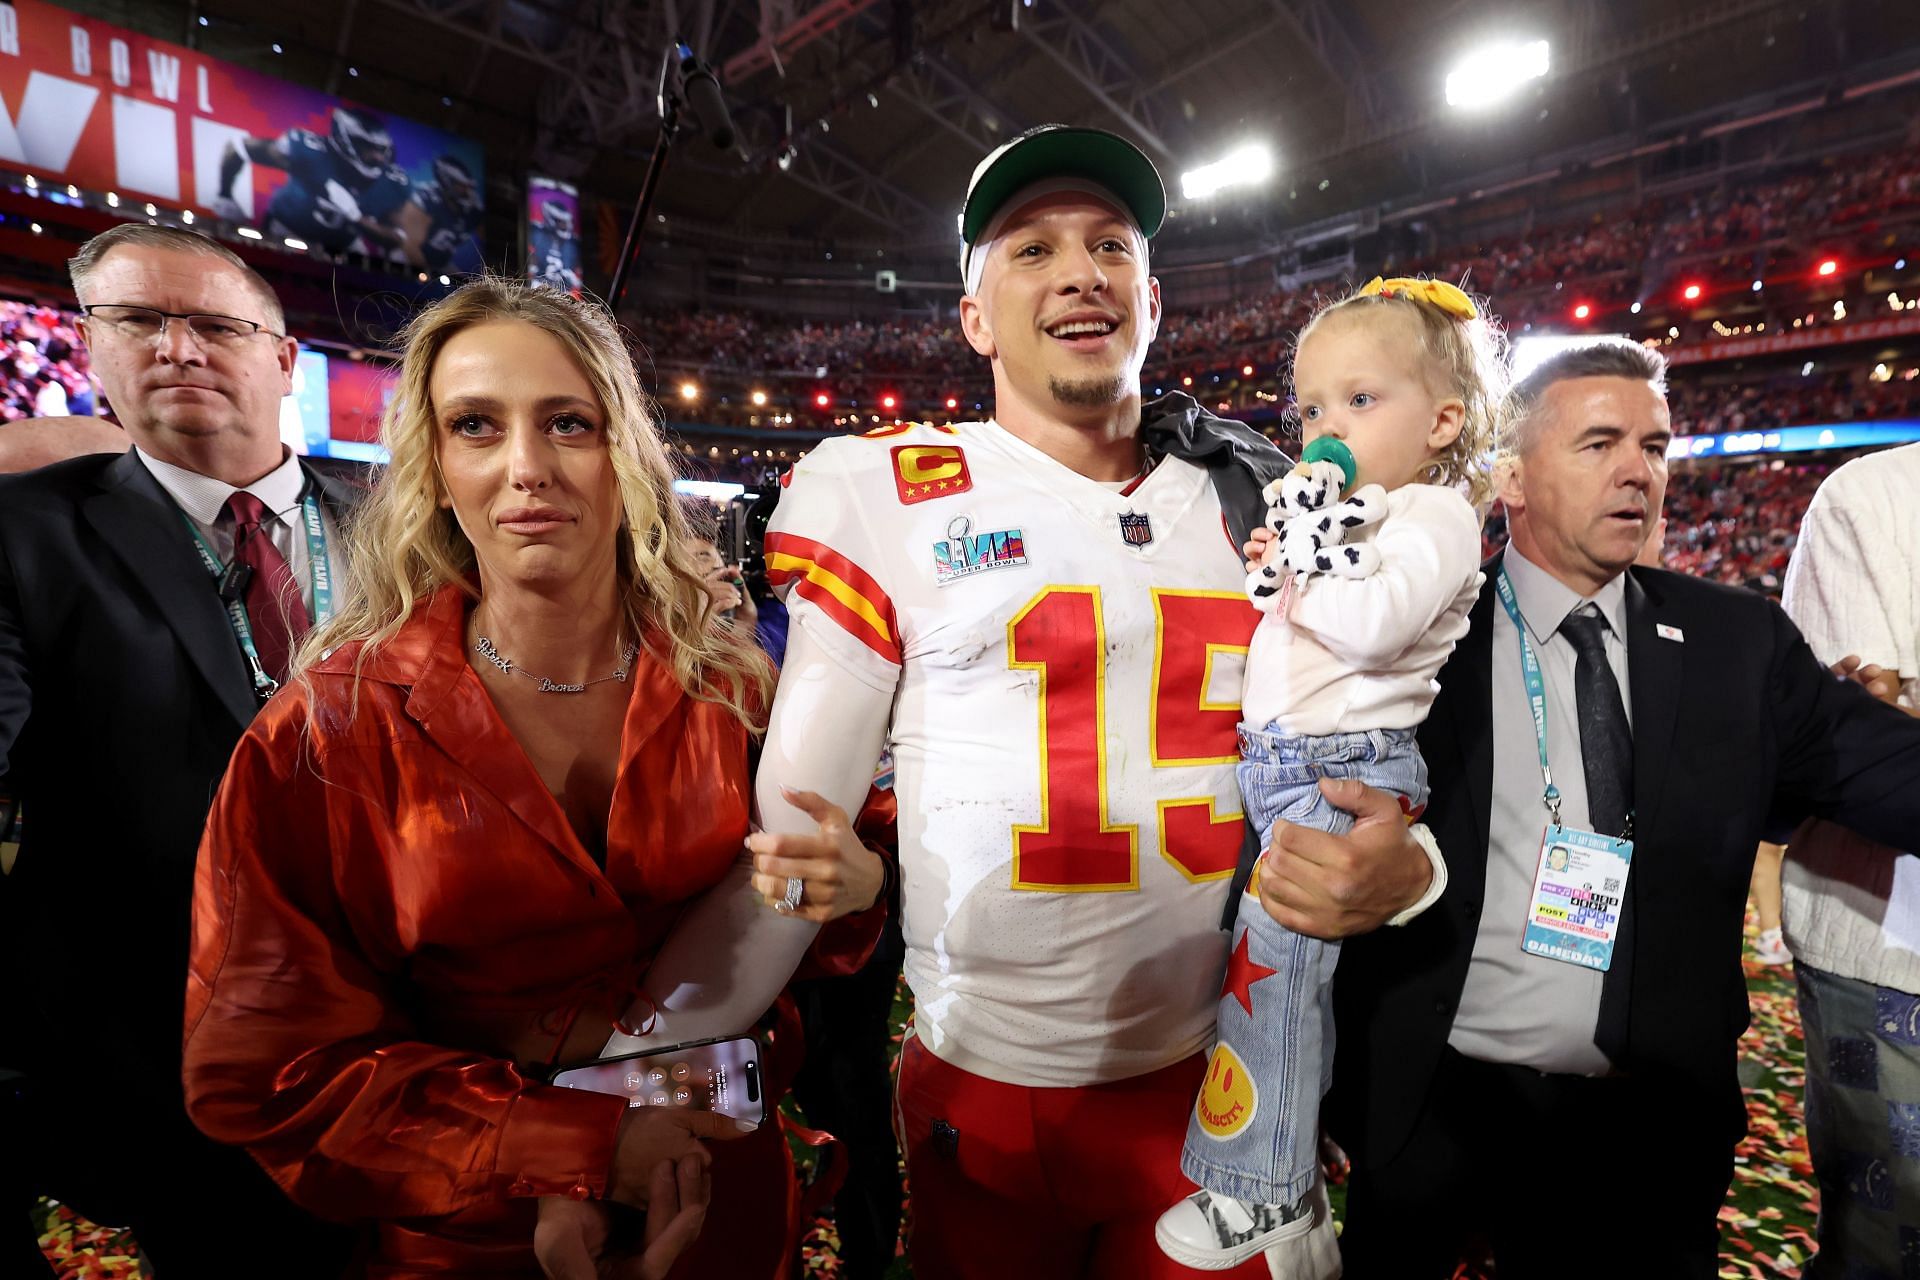 Patrick Mahomes and family at the Super Bowl LVII - Kansas City Chiefs v Philadelphia Eagles